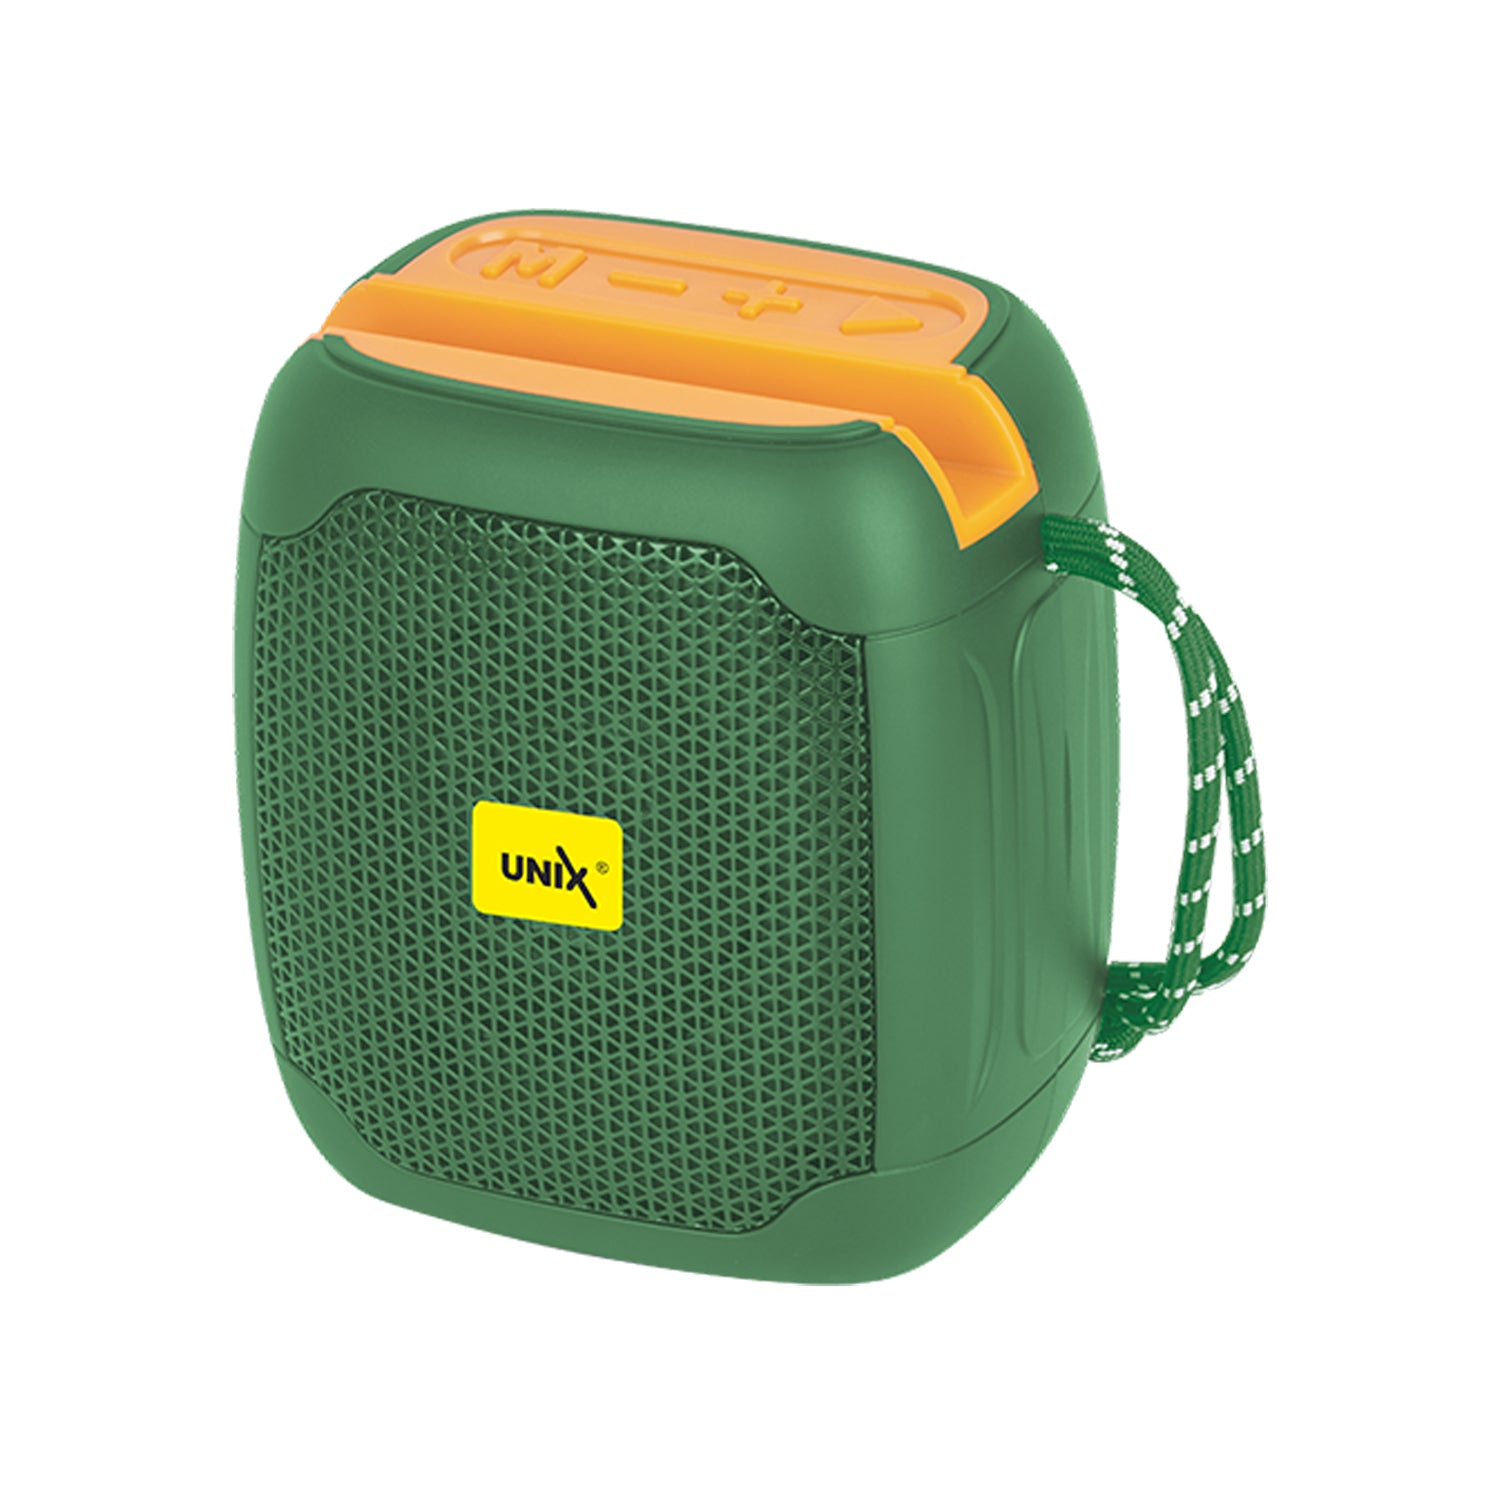 Unix UX-888 Super Sonic Wireless Speaker - Super Bass Green